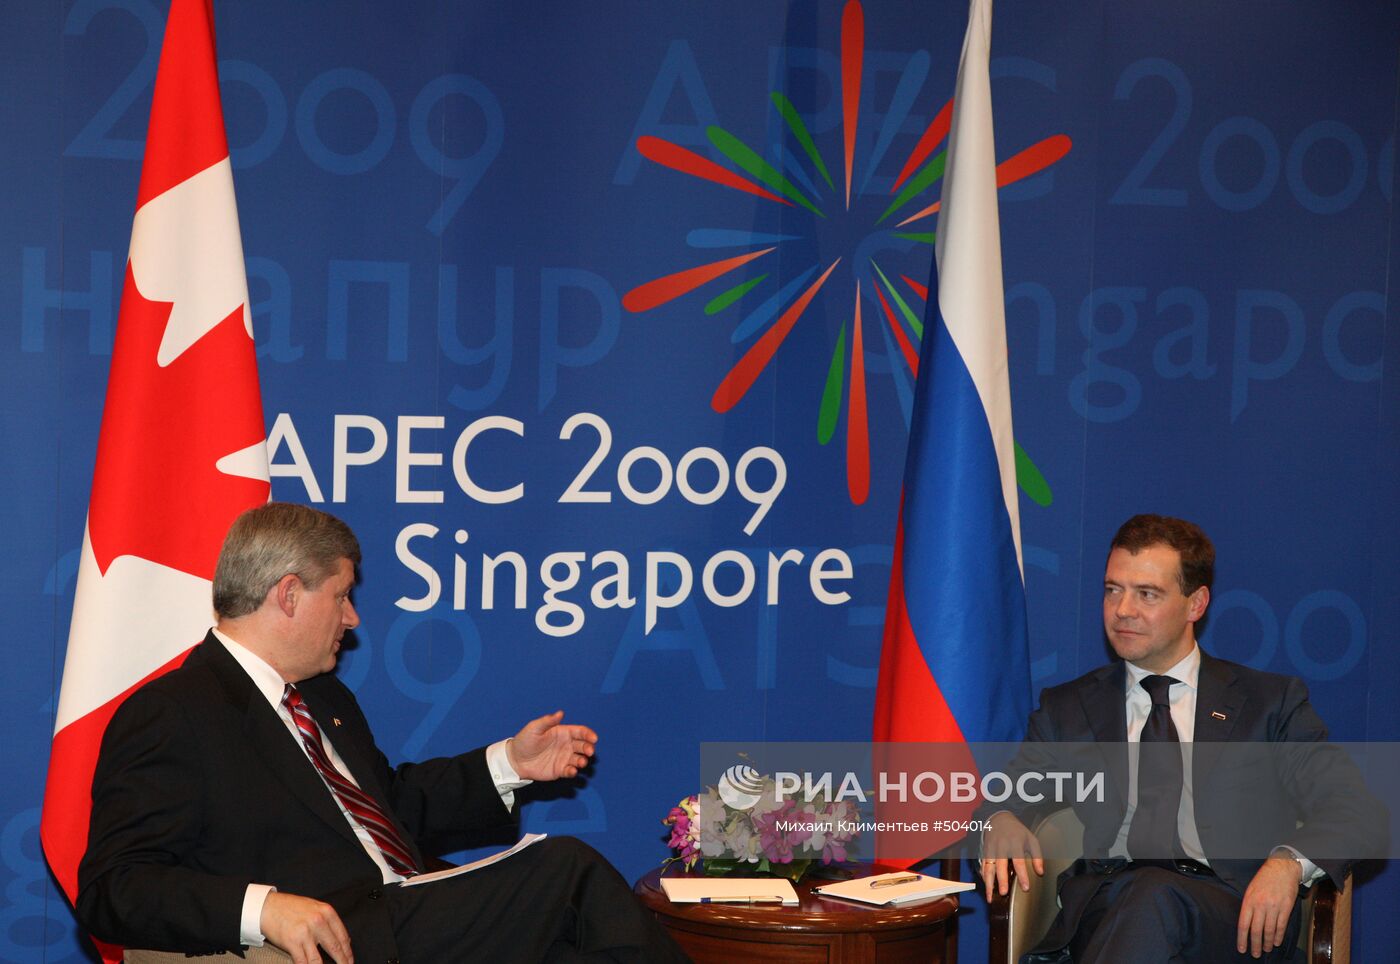 Встреча президента РФ и премьер-министра Канады в рамках АТЭС